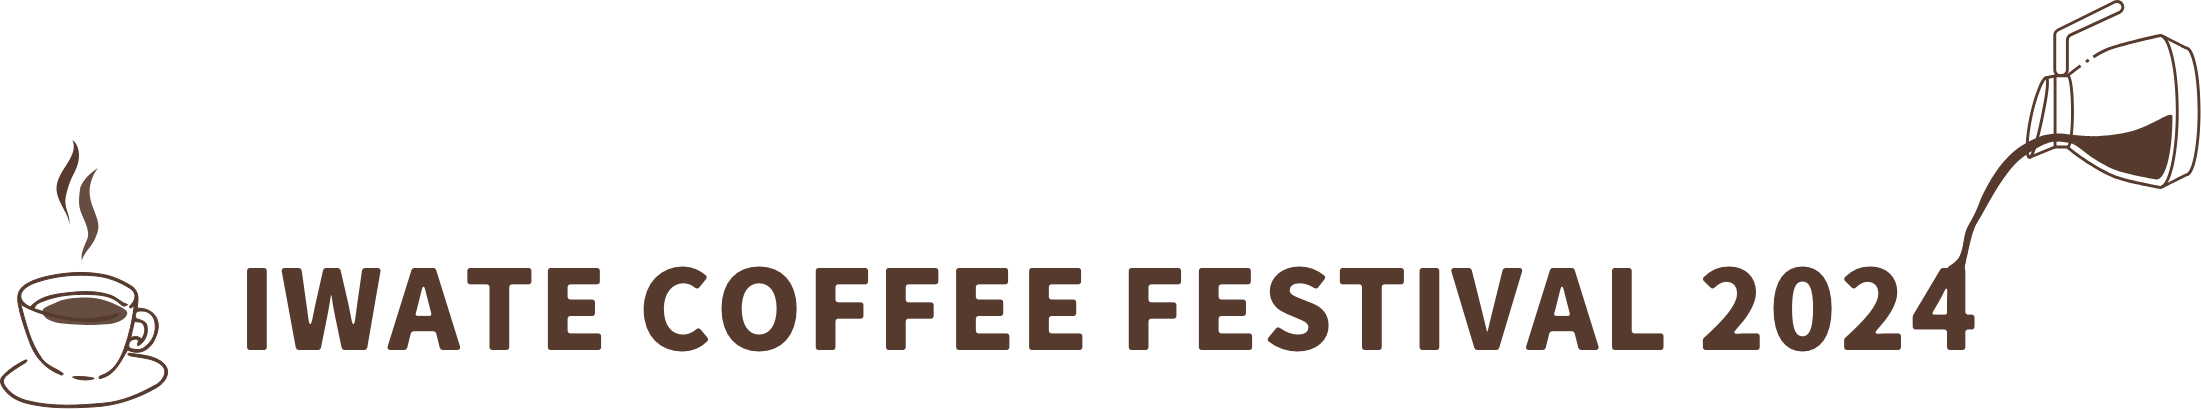 IWATE COFFEE FESTIVAL 2024 開催決定！